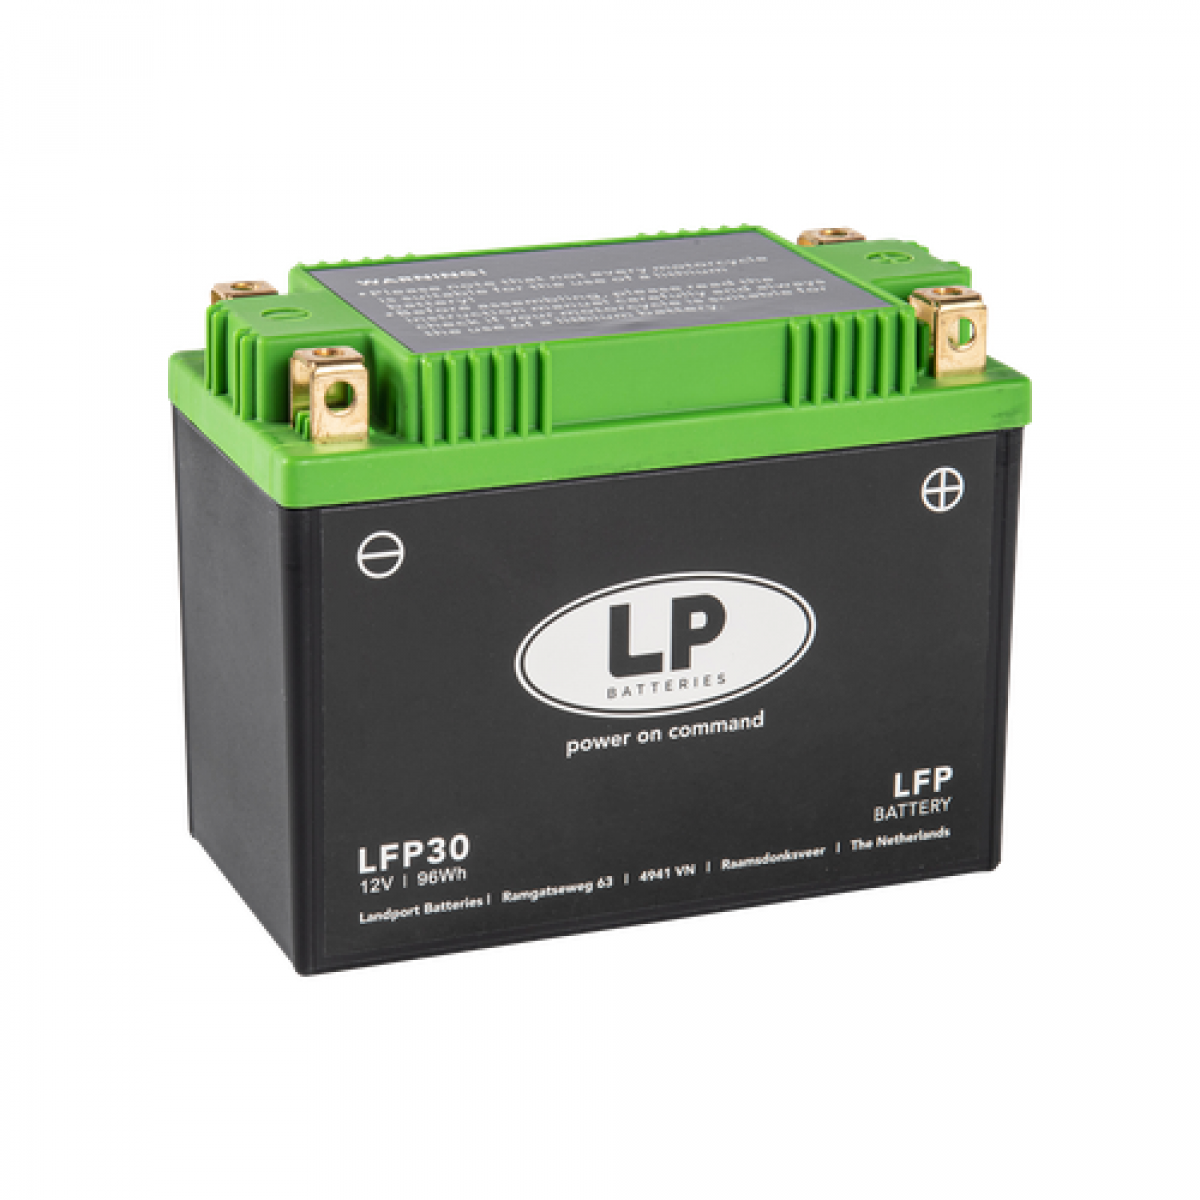 Verst In werkelijkheid pianist Lithium motor accu LFP30 12V 96Wh LifePO4 Landport